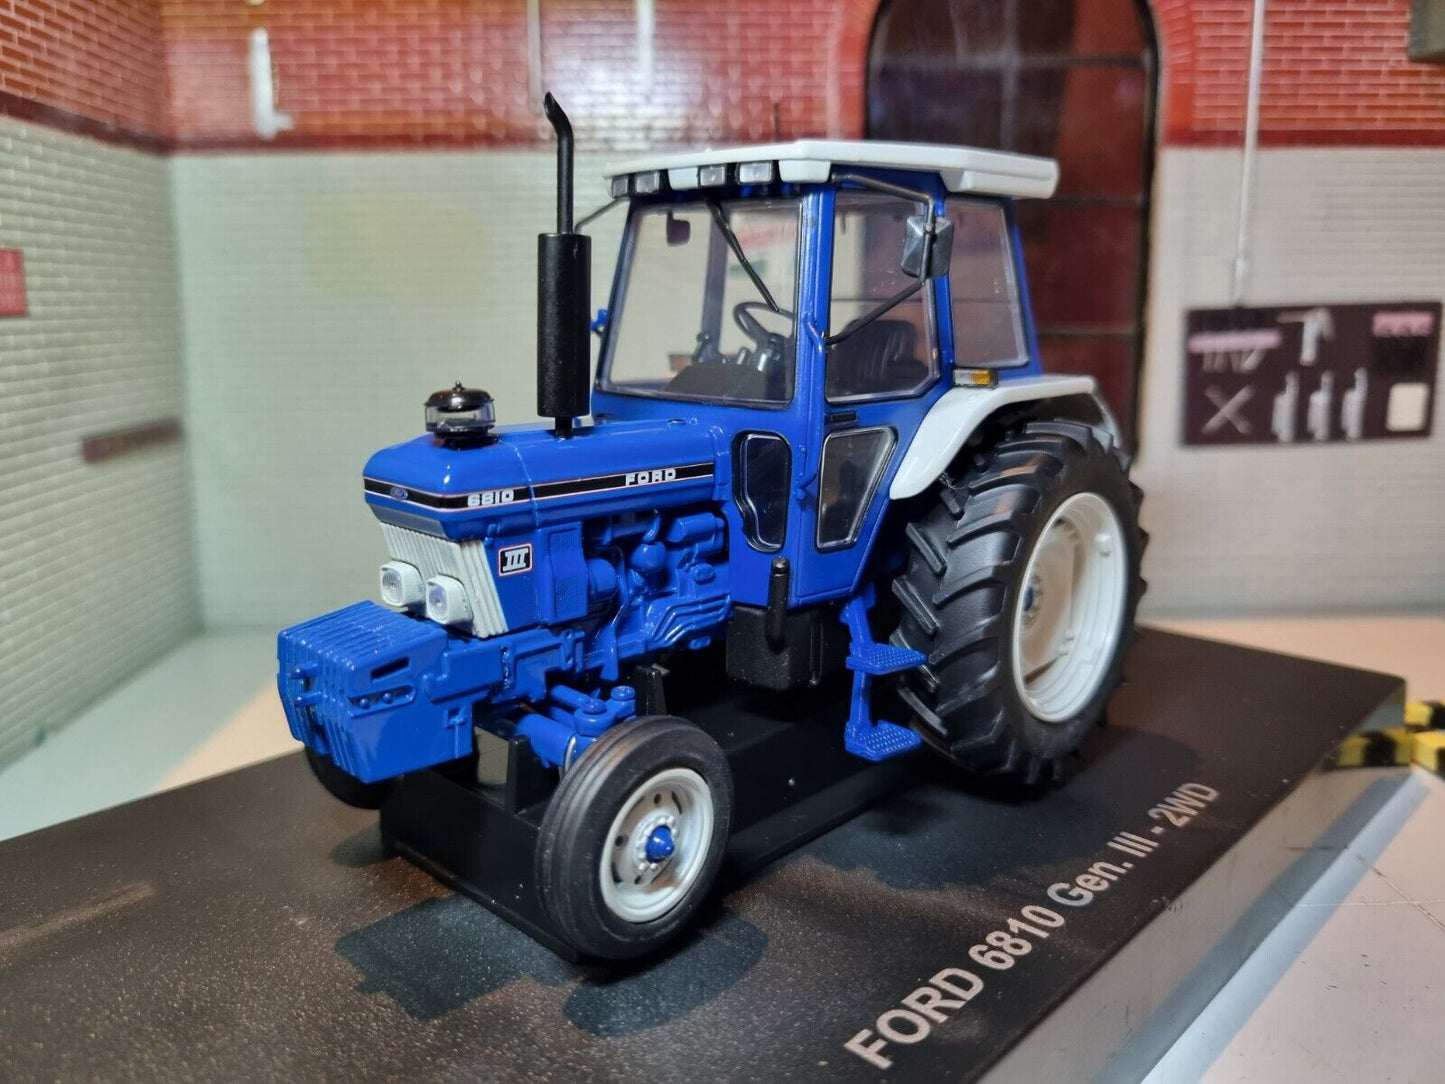 Ford 6810 Gen 3 2WD 1988-1991 Traktor 43308 Universal Hobbies 1:32